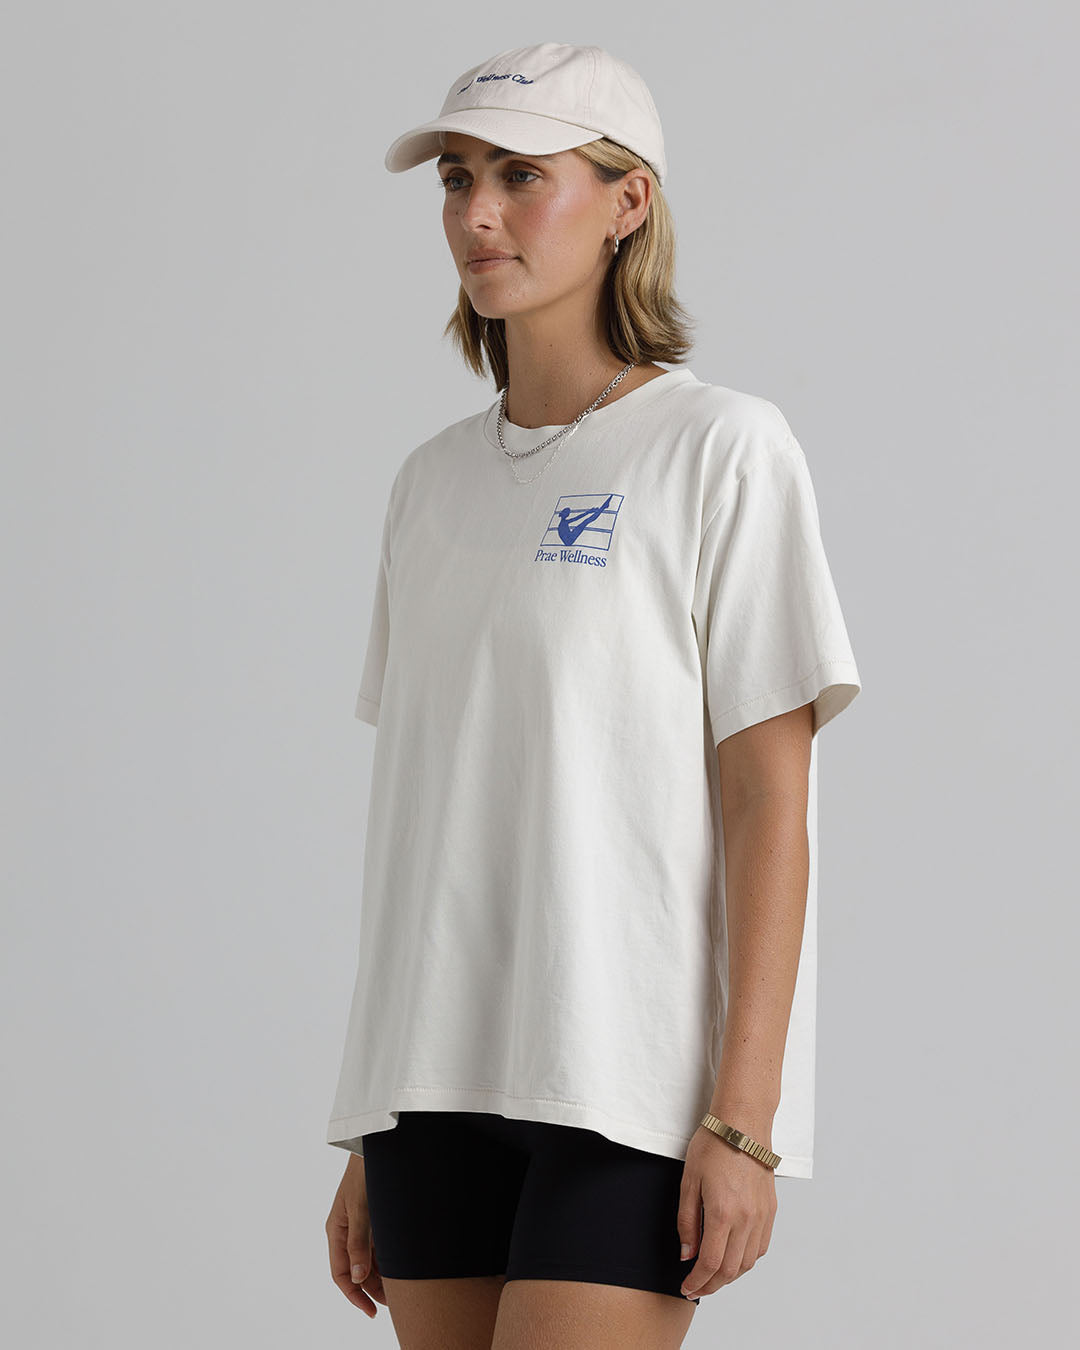 Movement T-Shirt – Cream / Royal Blue General by Prae Wellness - Prae Store